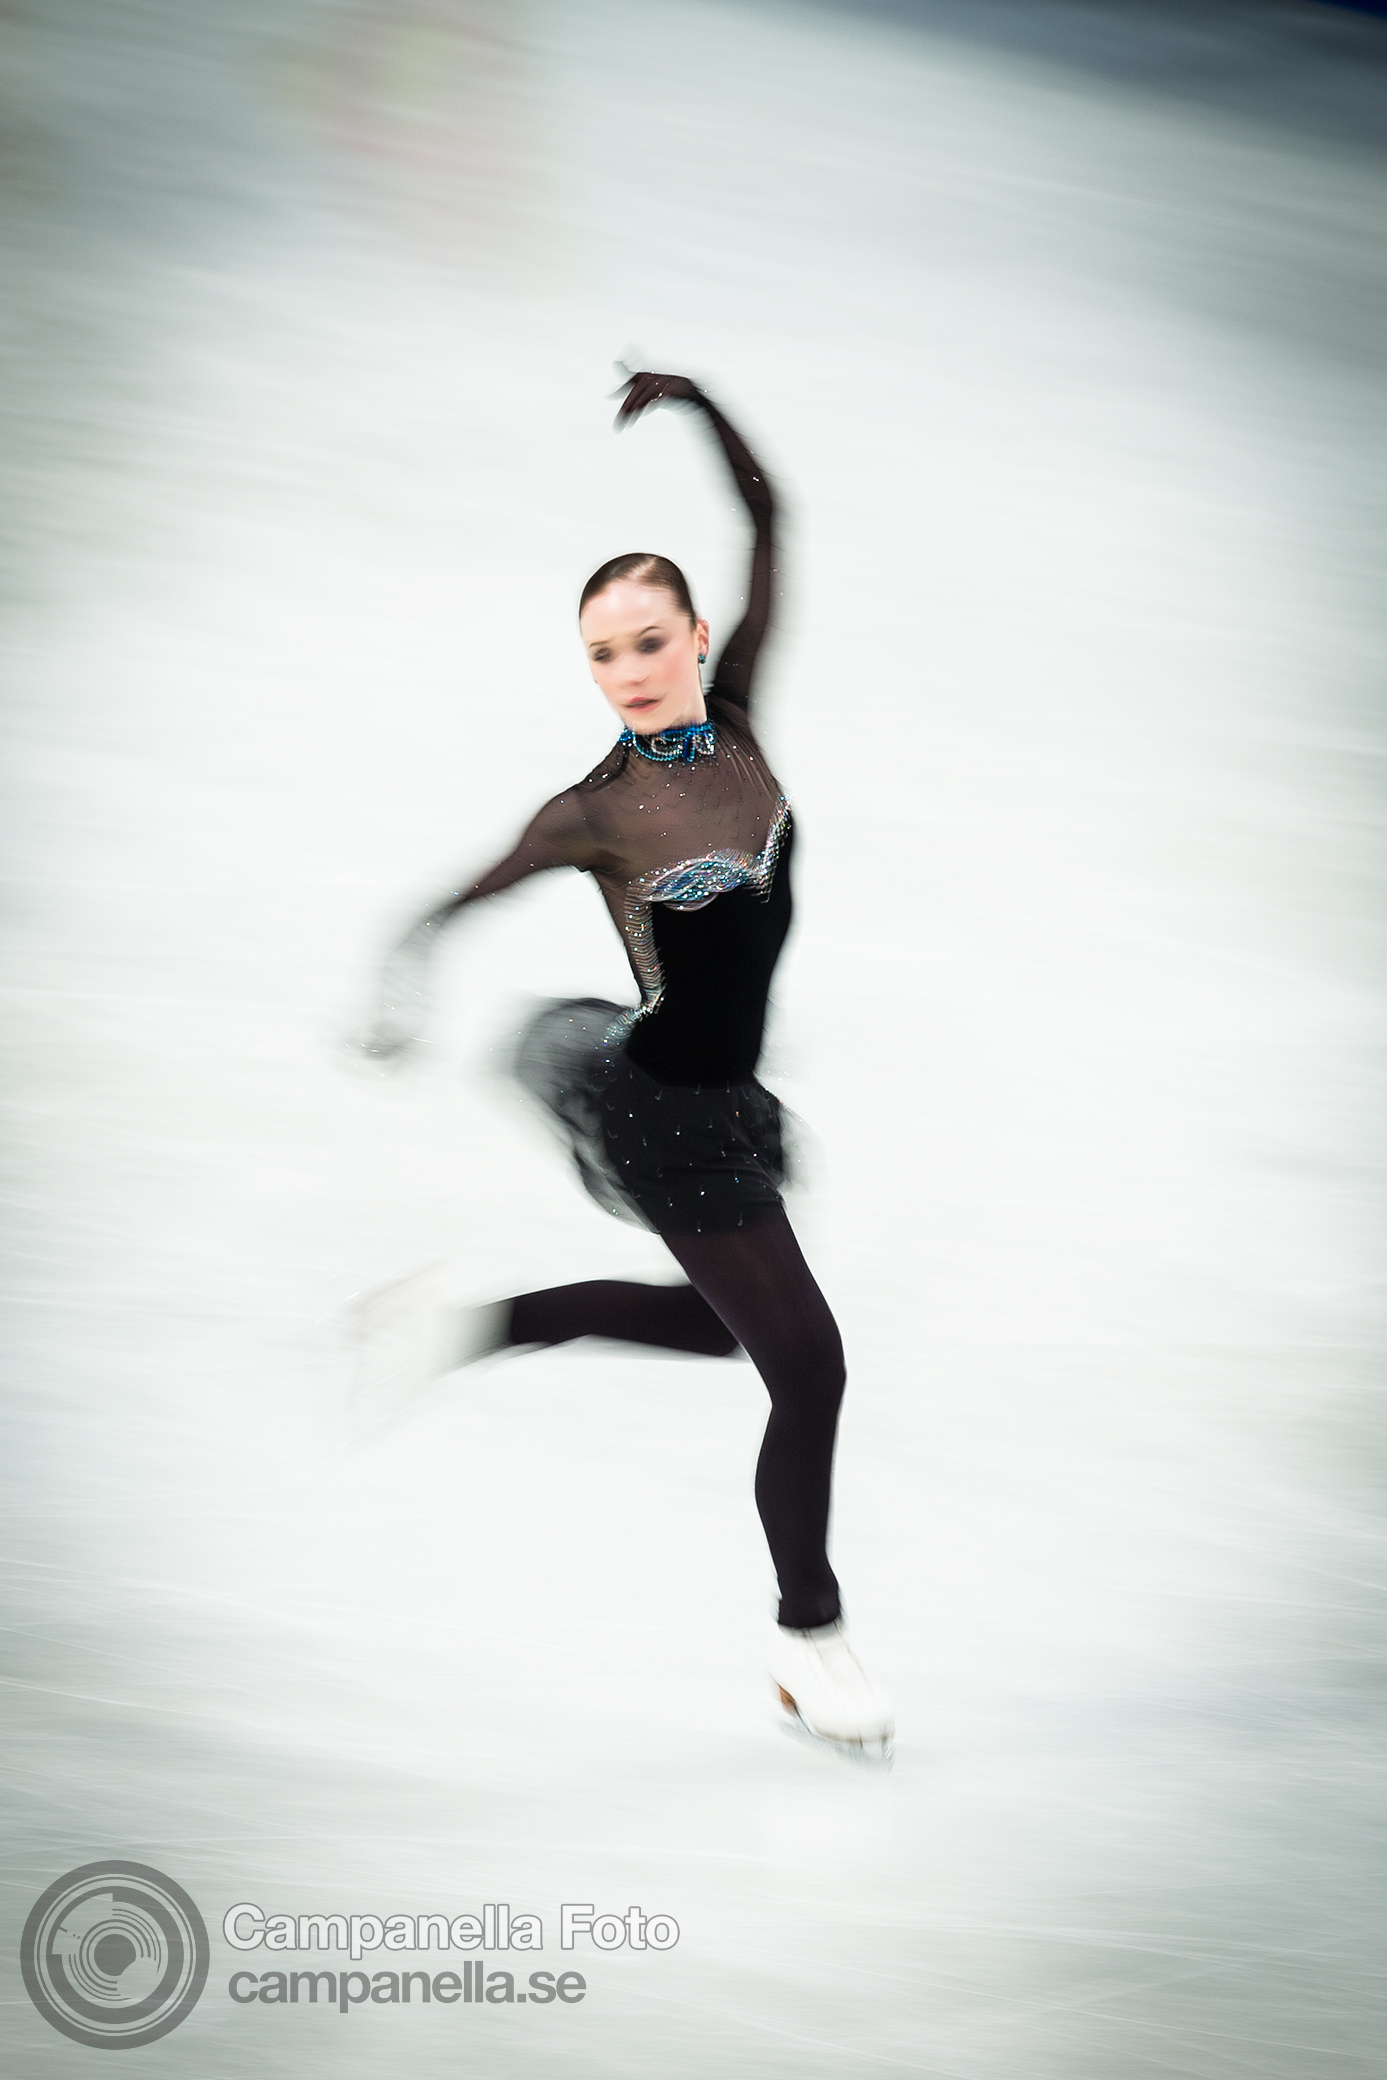 Figure Skating Championship - Michael Campanella Photography